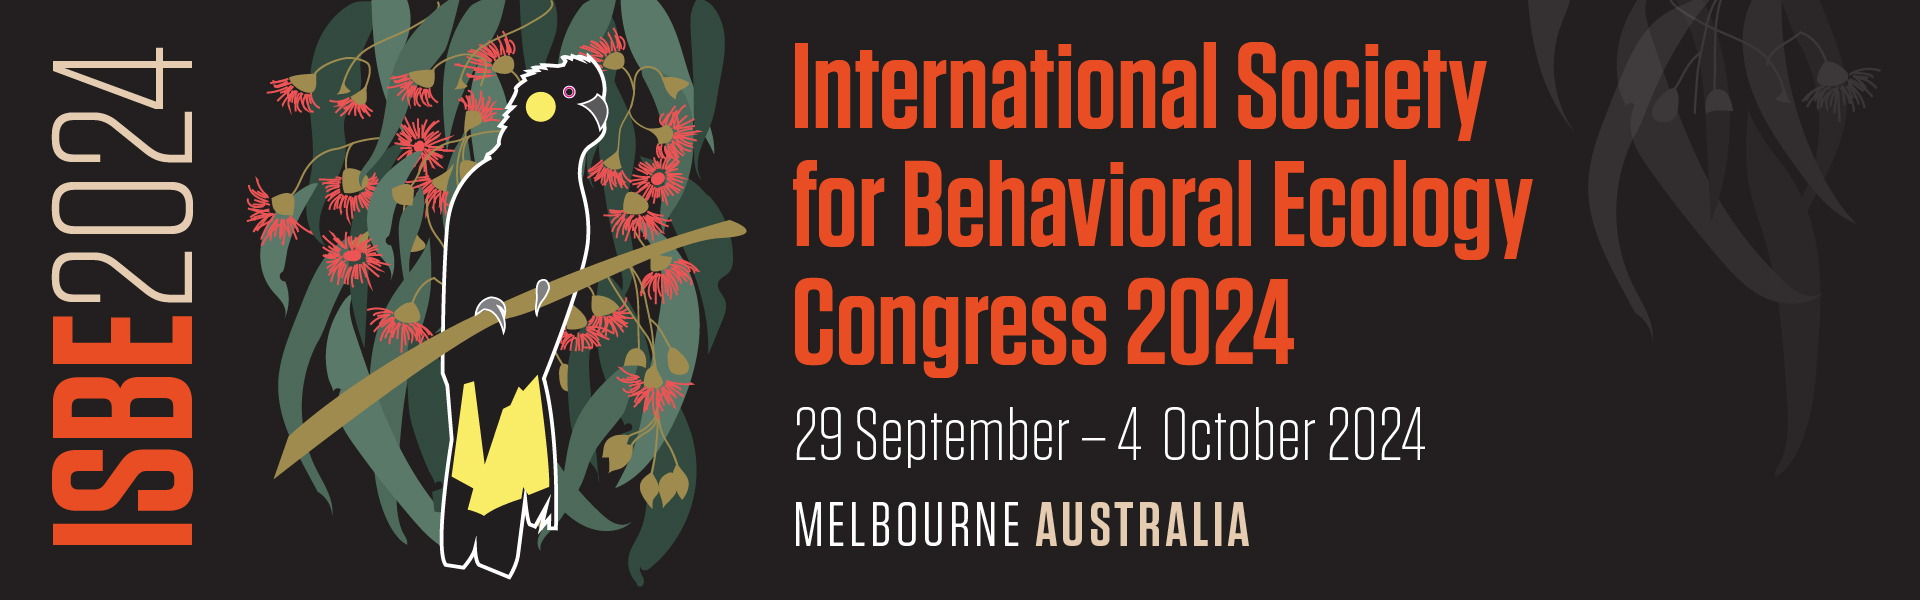 International Society of Behavioural Ecology Congress